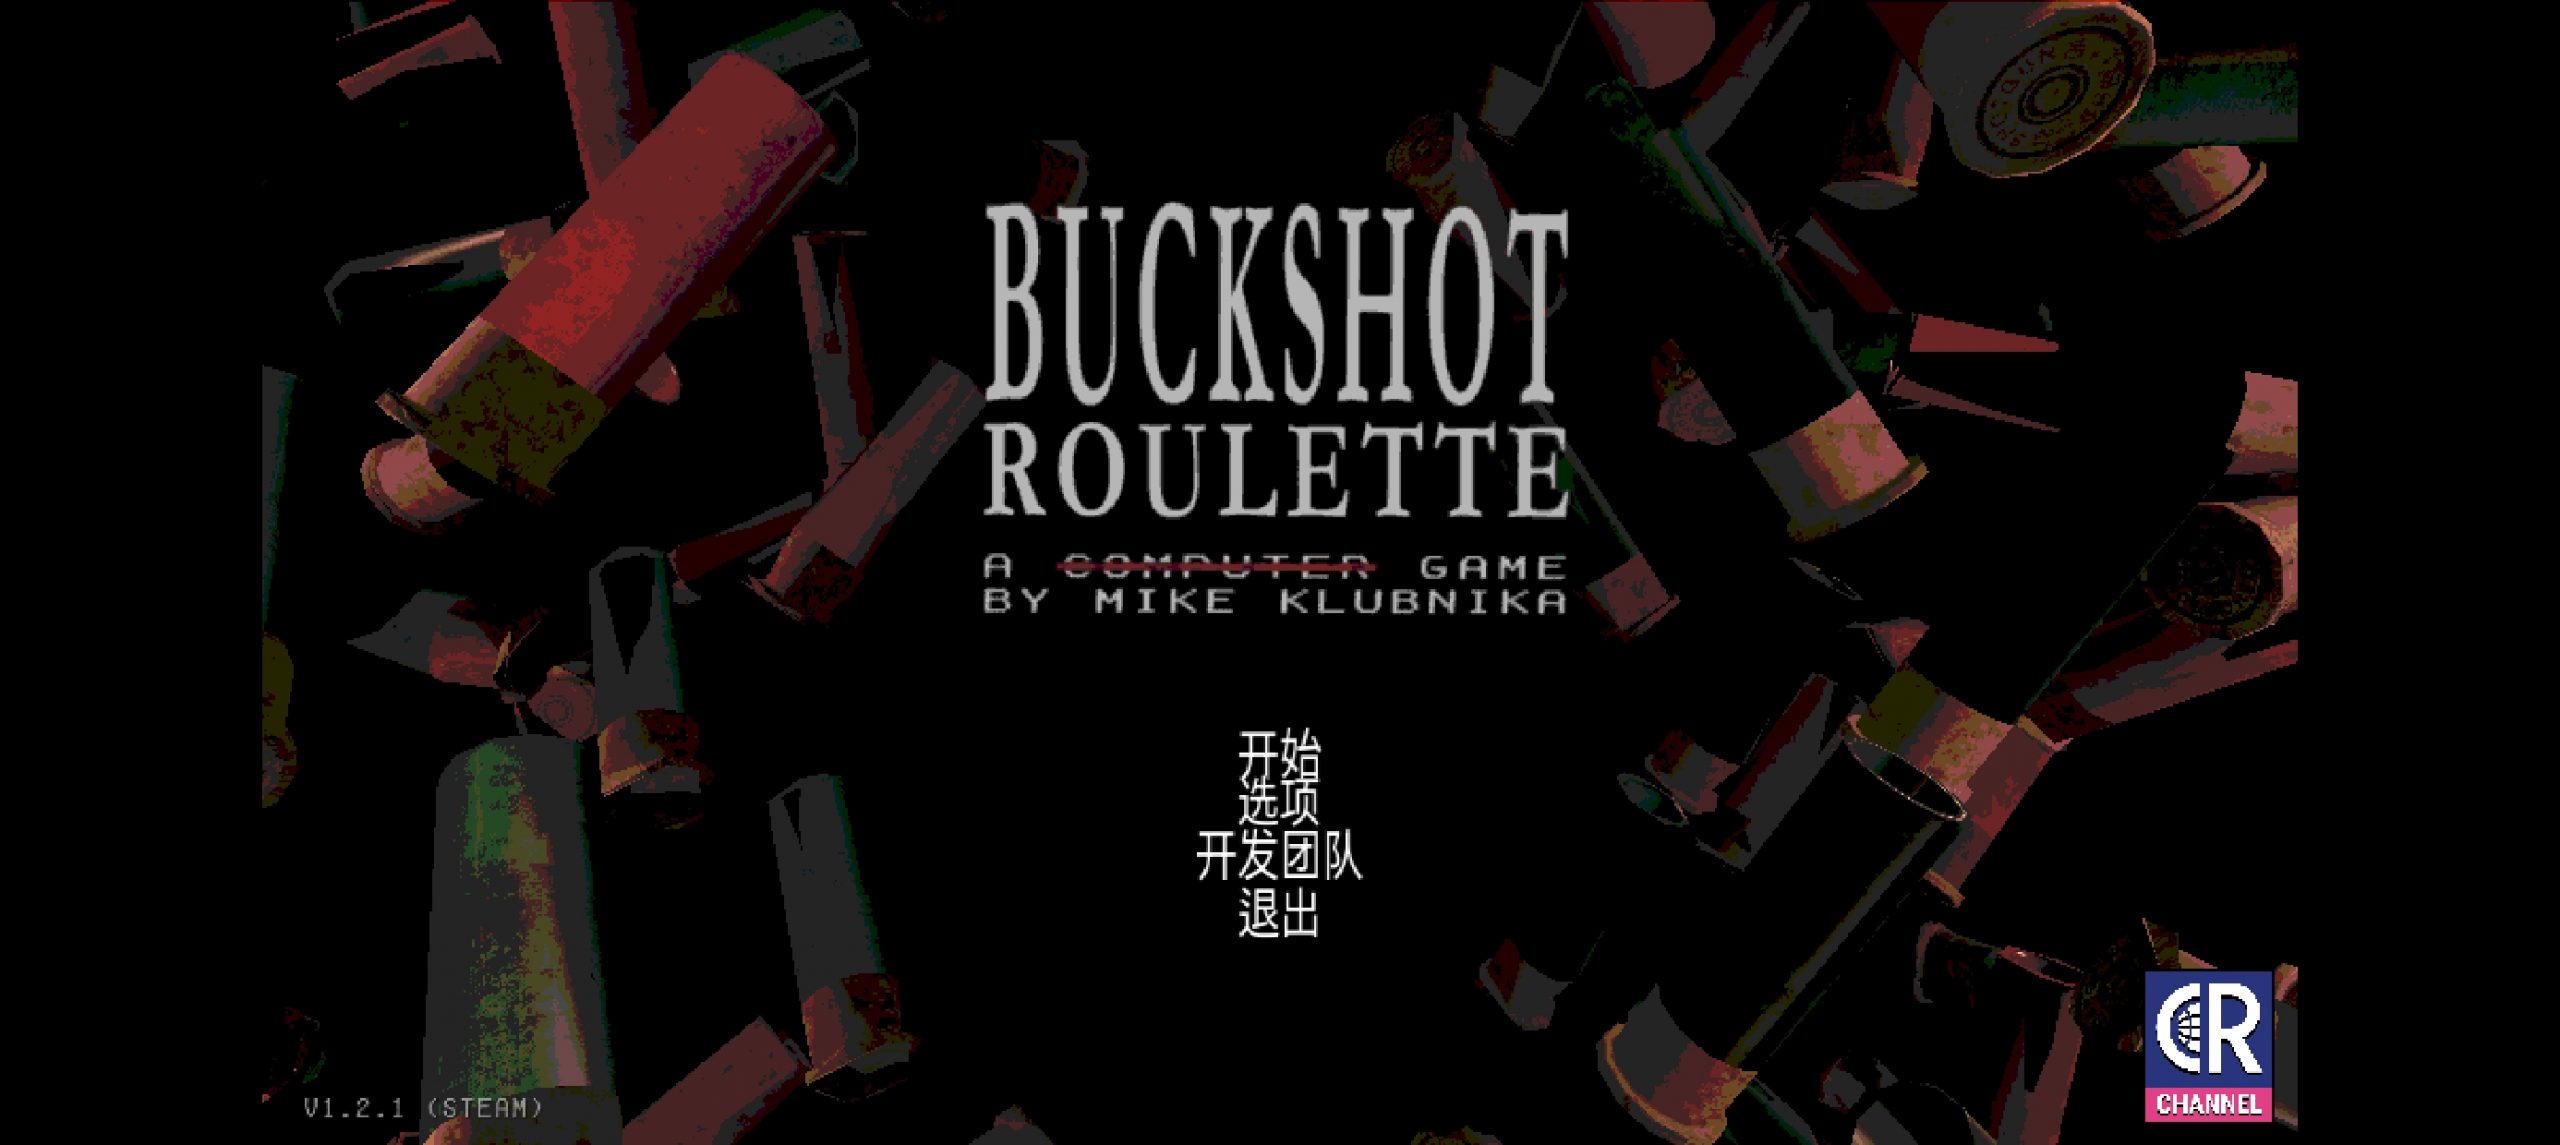 安卓手机游戏《恶魔轮盘Buckshot Roulettev1.2.1》[完整版]Steam移植